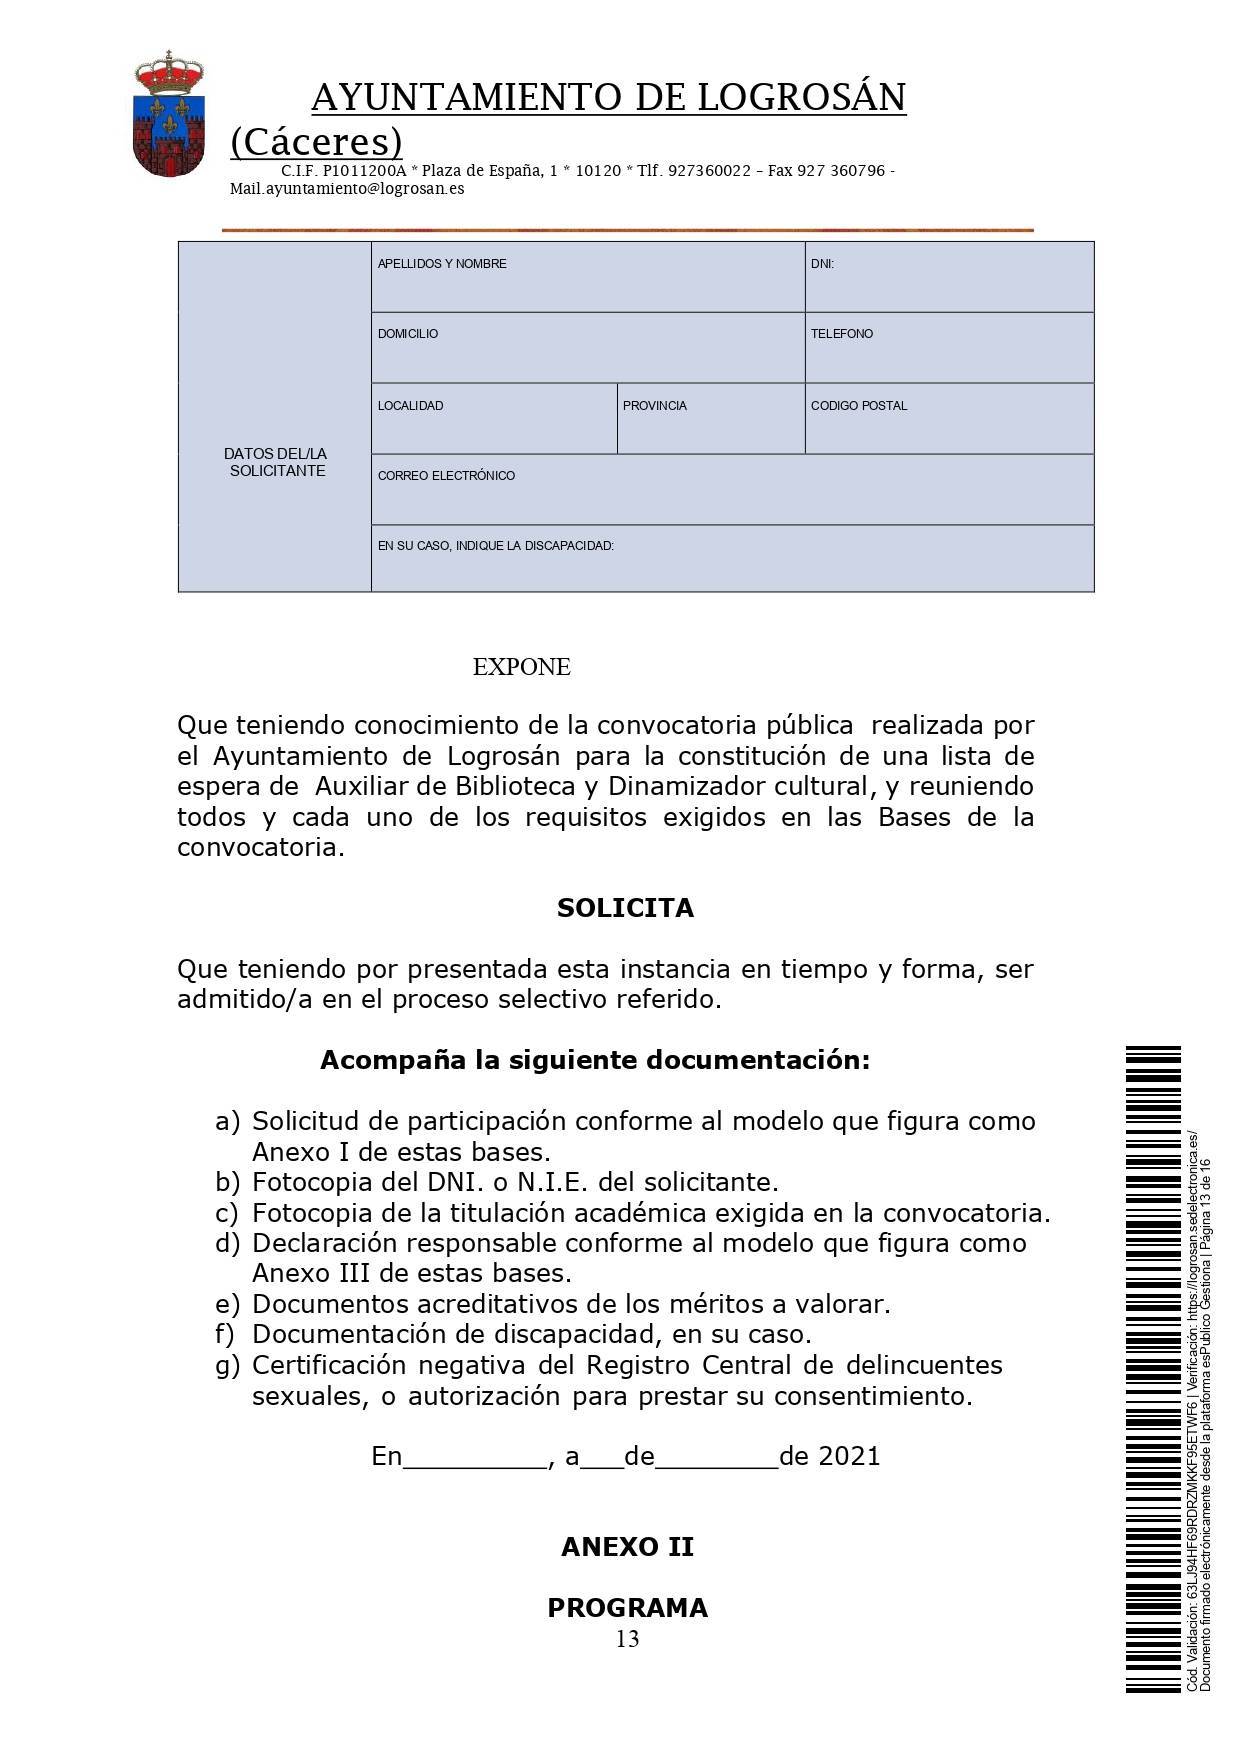 Técnicos-as auxiliar de biblioteca y dinamizador-a cultural (2021) - Logrosán (Cáceres) 13